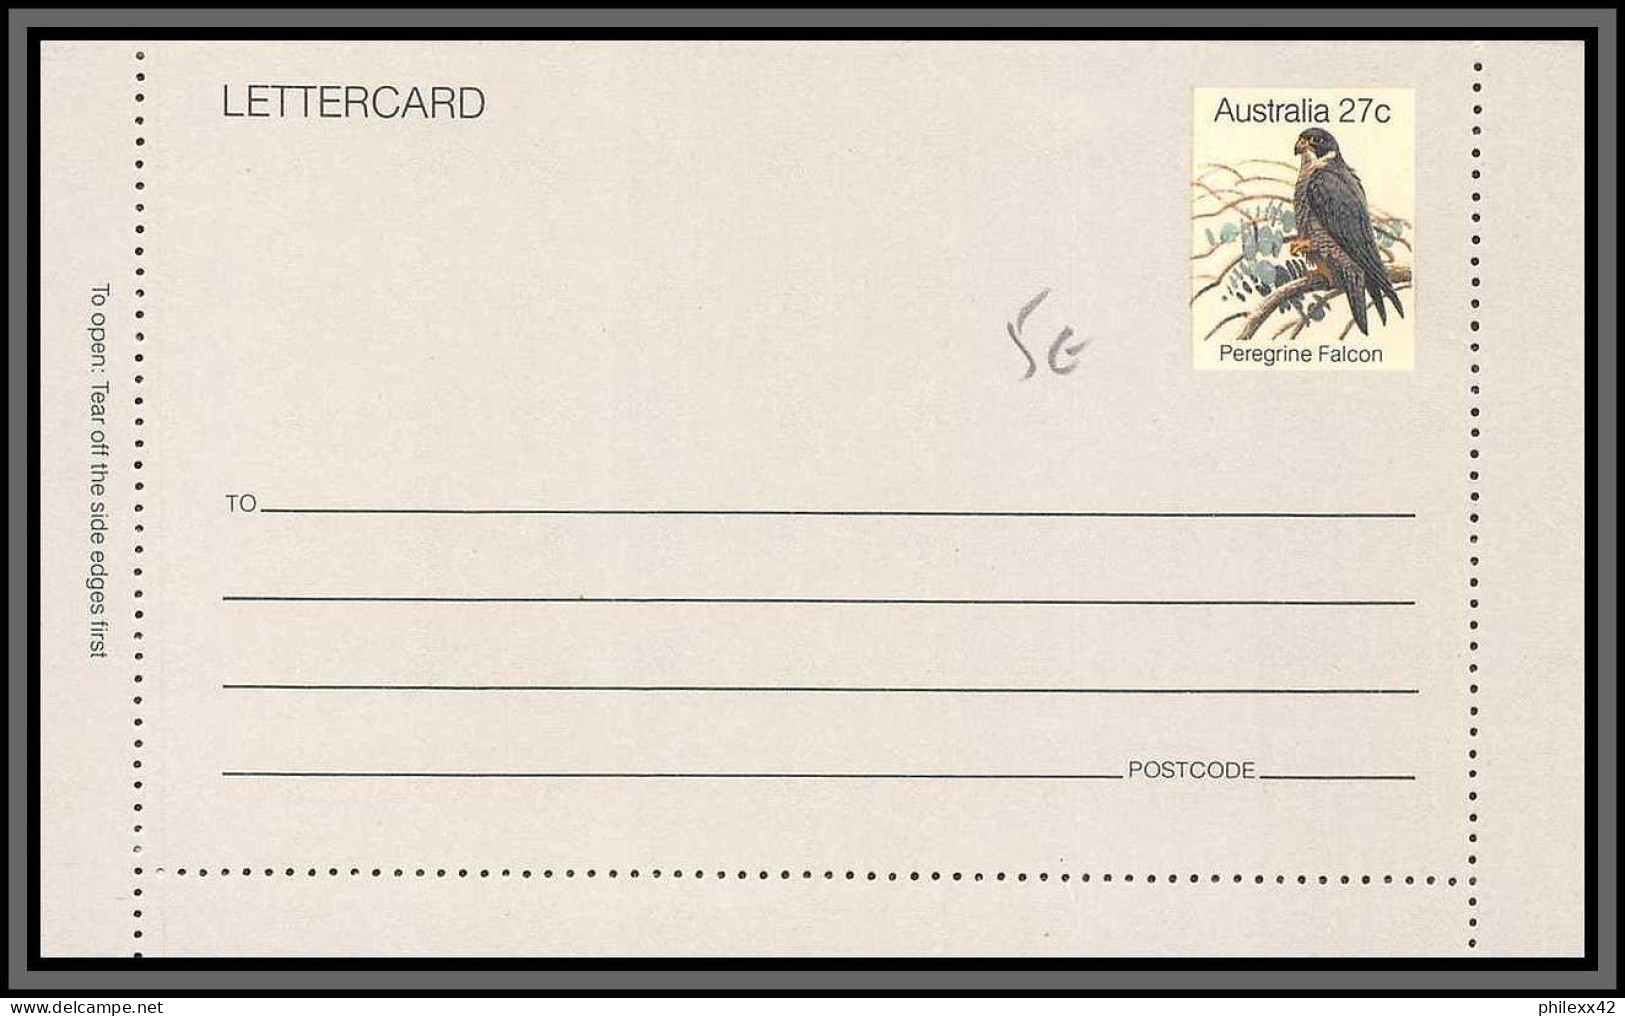 11247 PEREGRINE FALCON Faucon Pèlerin Neuf Tb Entier Stationery Letter Card Australie Australia  - Enteros Postales